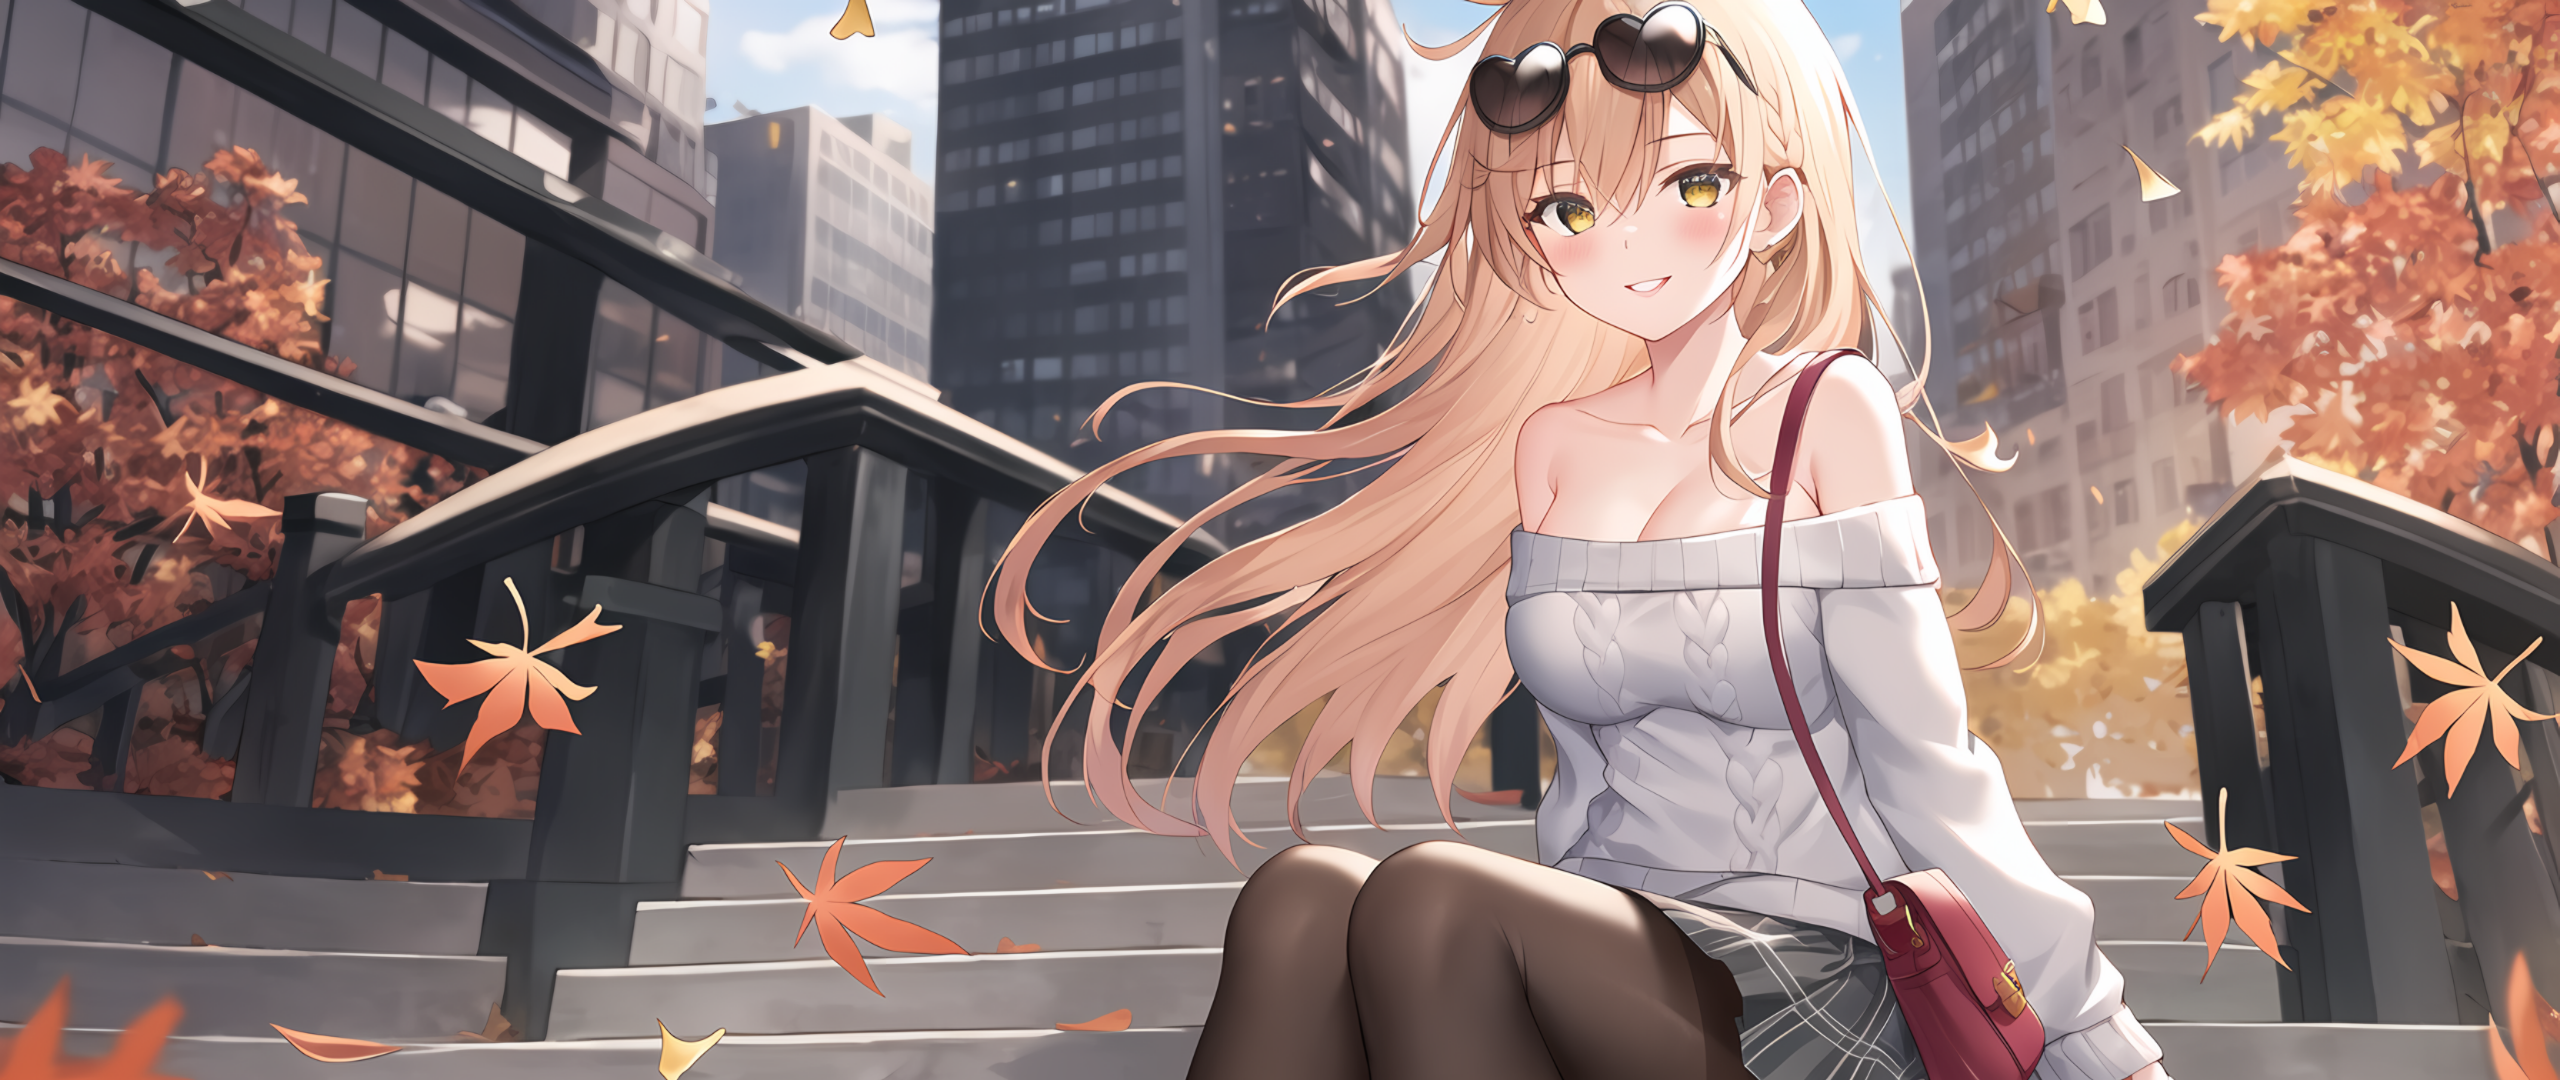 Ai Art Anime Anime Girls Sunglasses Sweater Skirt Bag Stairs Maple Leaf  Purse Leaves Blushing Wallpaper - Resolution:2560x1080 - ID:1363792 -  